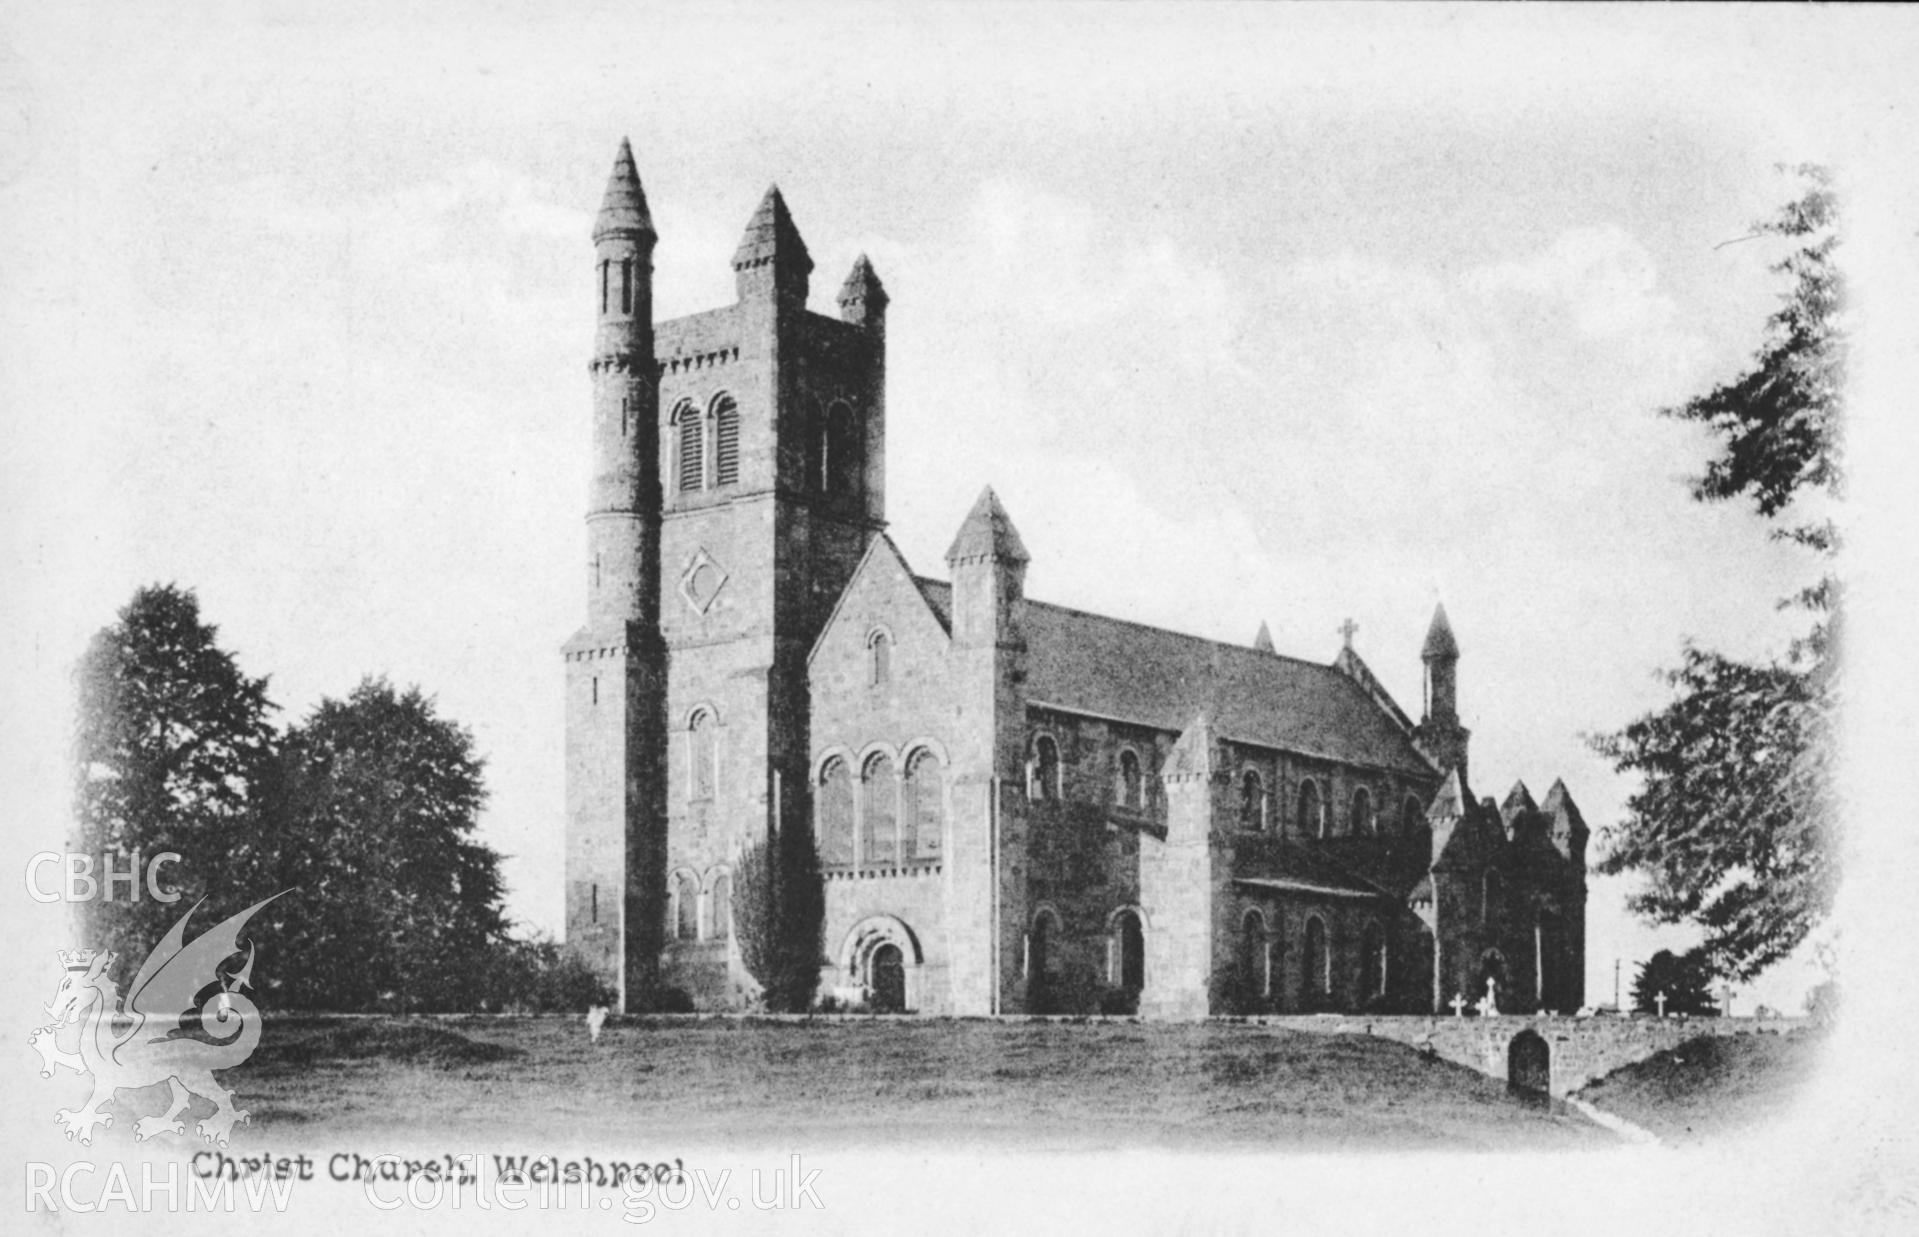 Postcard view of Christ Church, Welshpool.